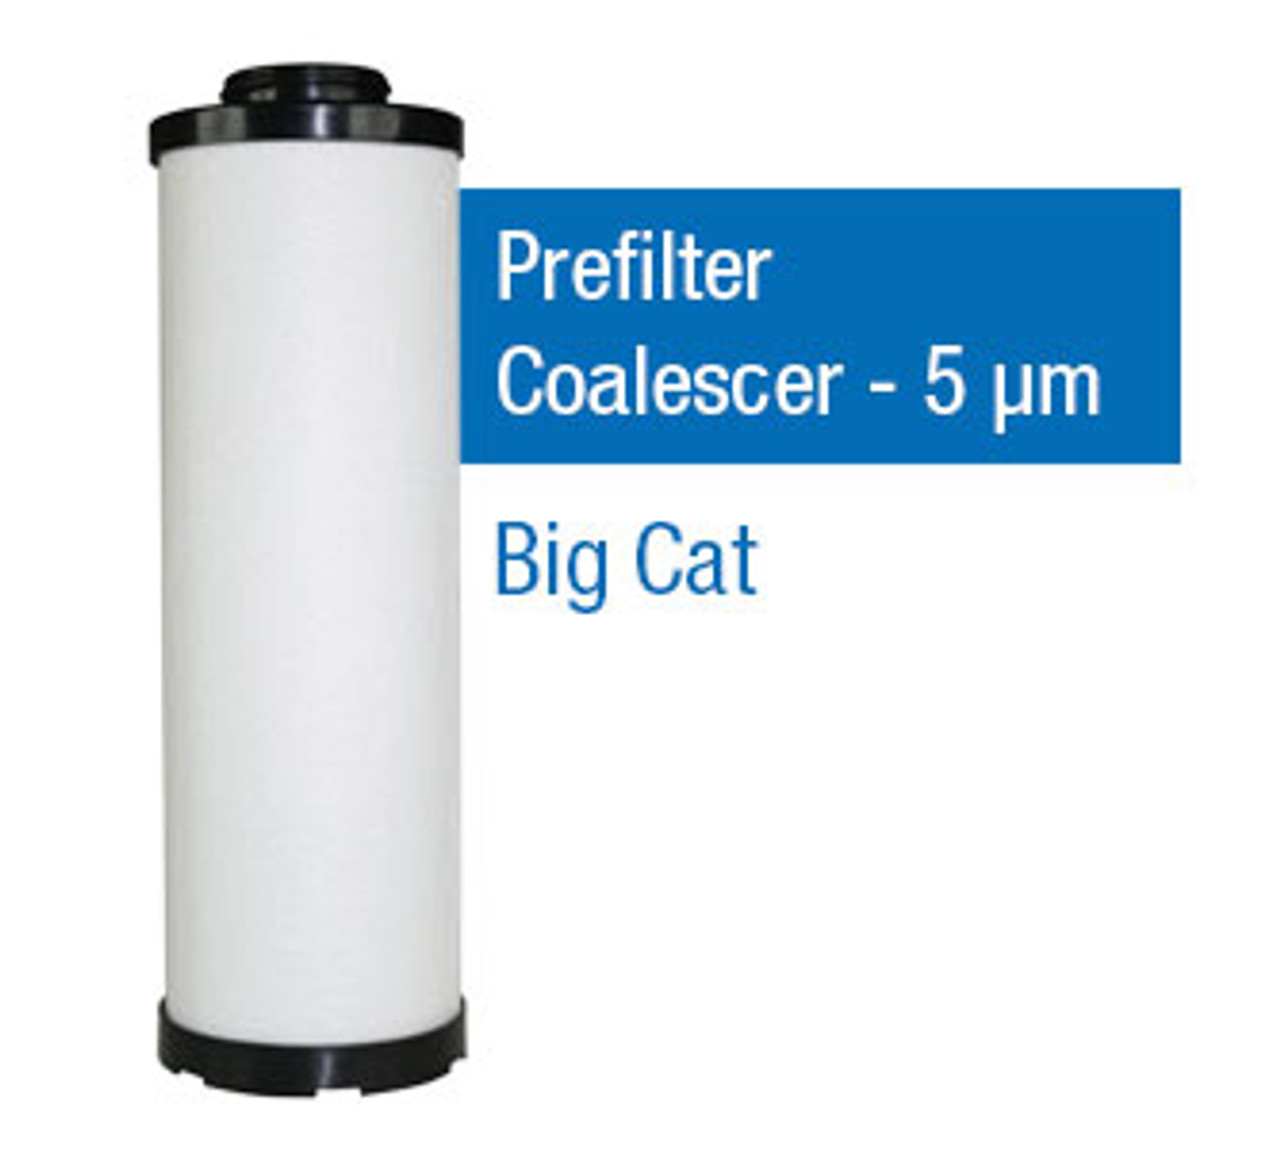 WFBC225P - Grade P - Prefilter Coalescer - 5 um (BCE225X5/BC225X5)